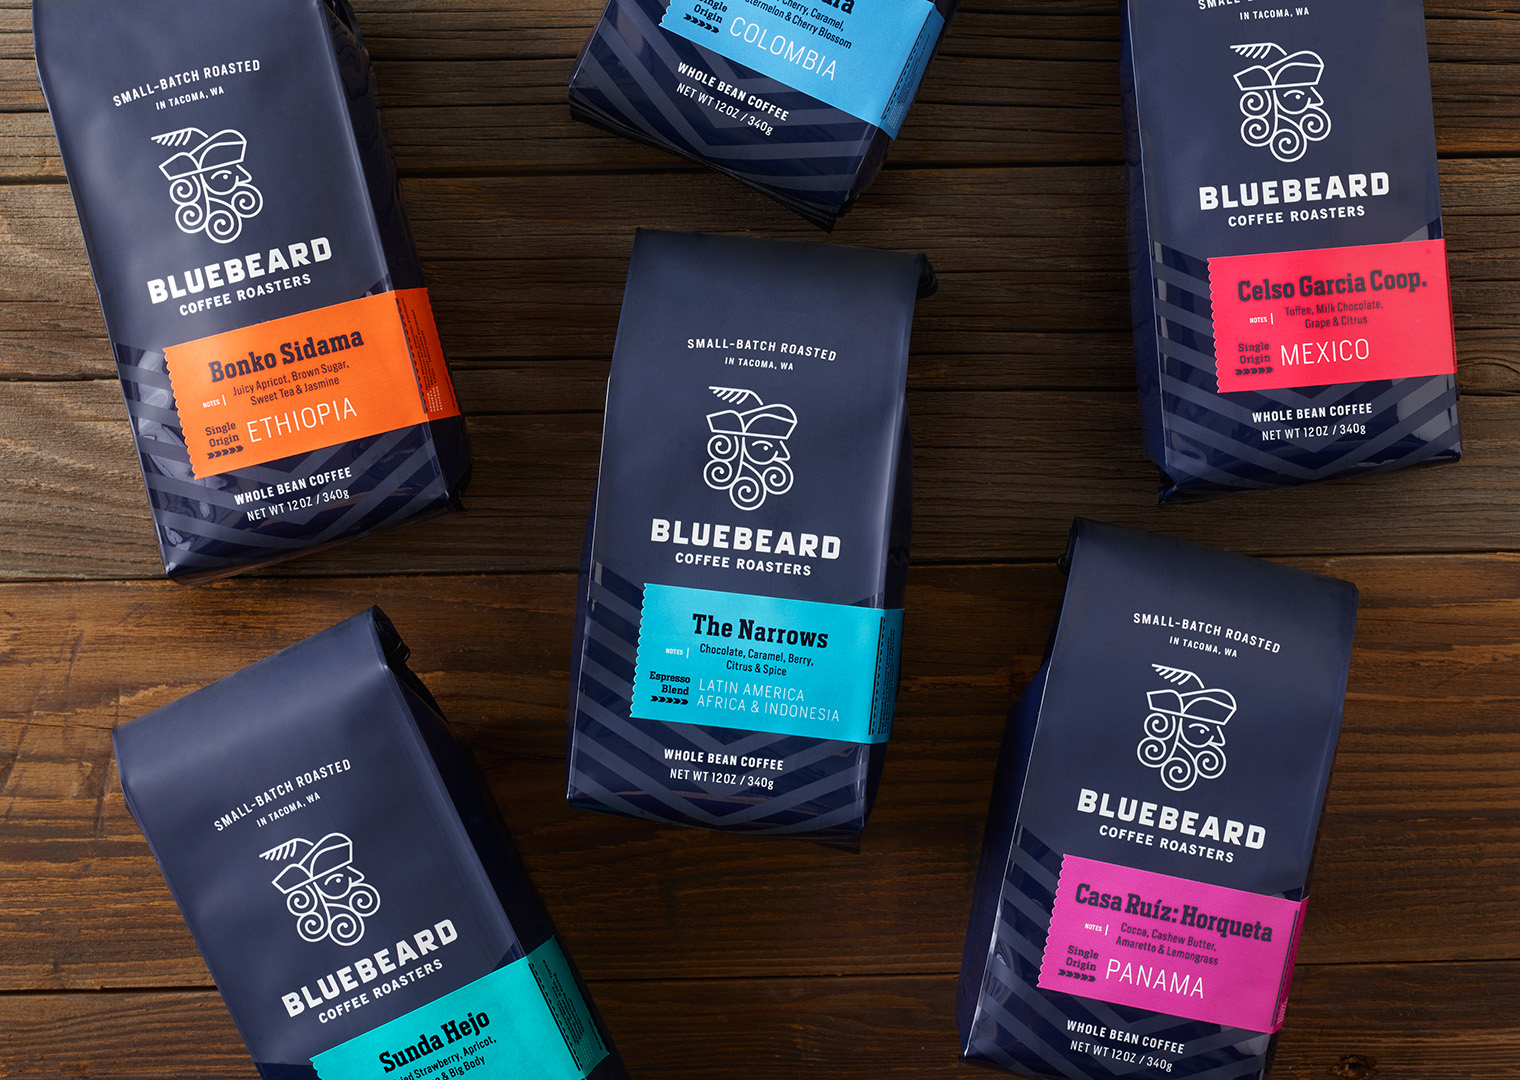 Bluebeard Coffee Roasters retail bags